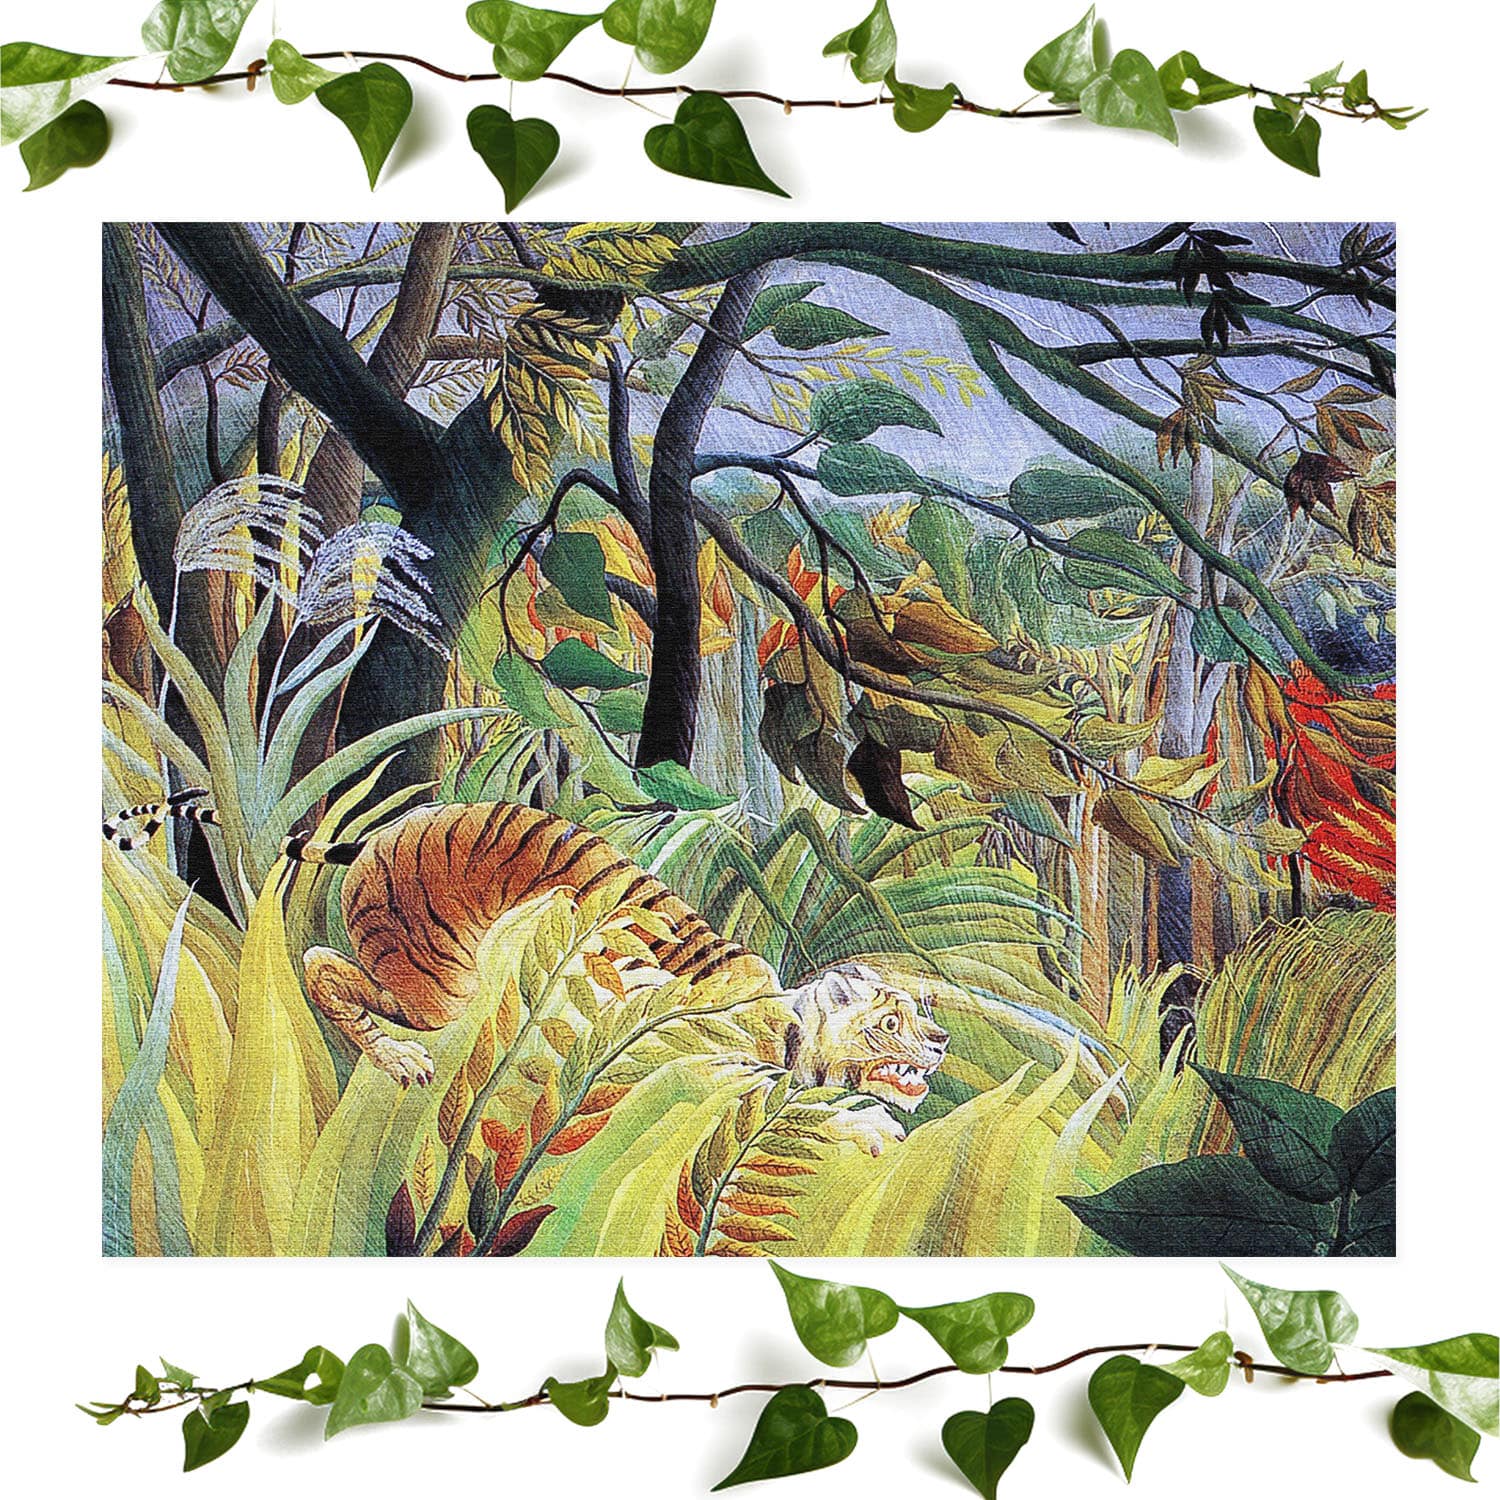 Jungle Landscape art prints featuring a scared tiger, vintage wall art room decor